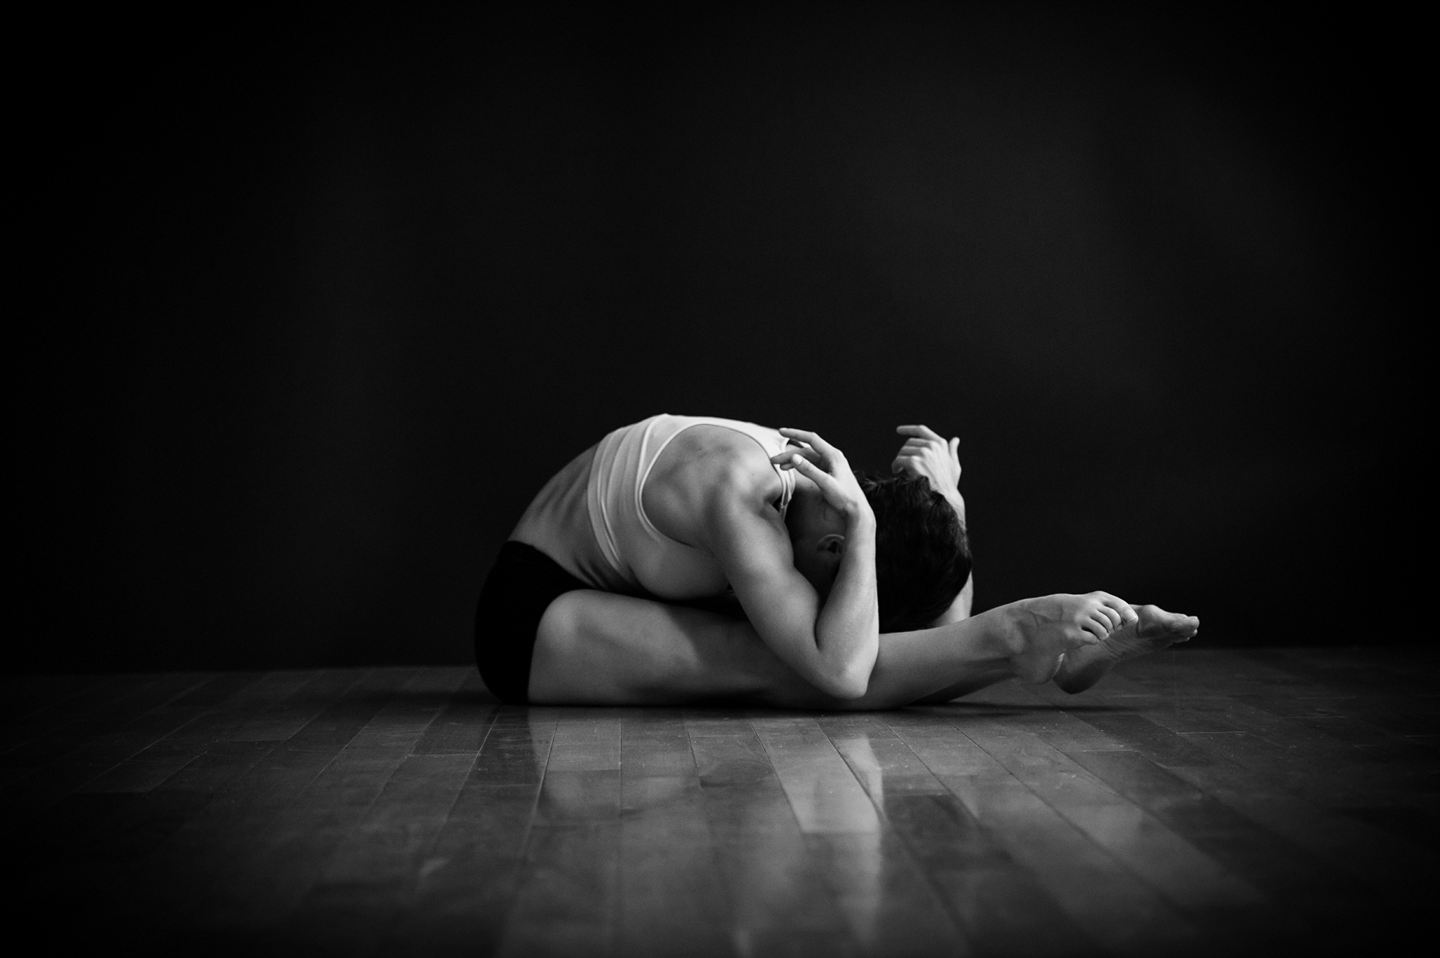 Los Angeles Dance Portrait Photo - Olga Sokolova - by Tommy Xing Photography 27.JPG